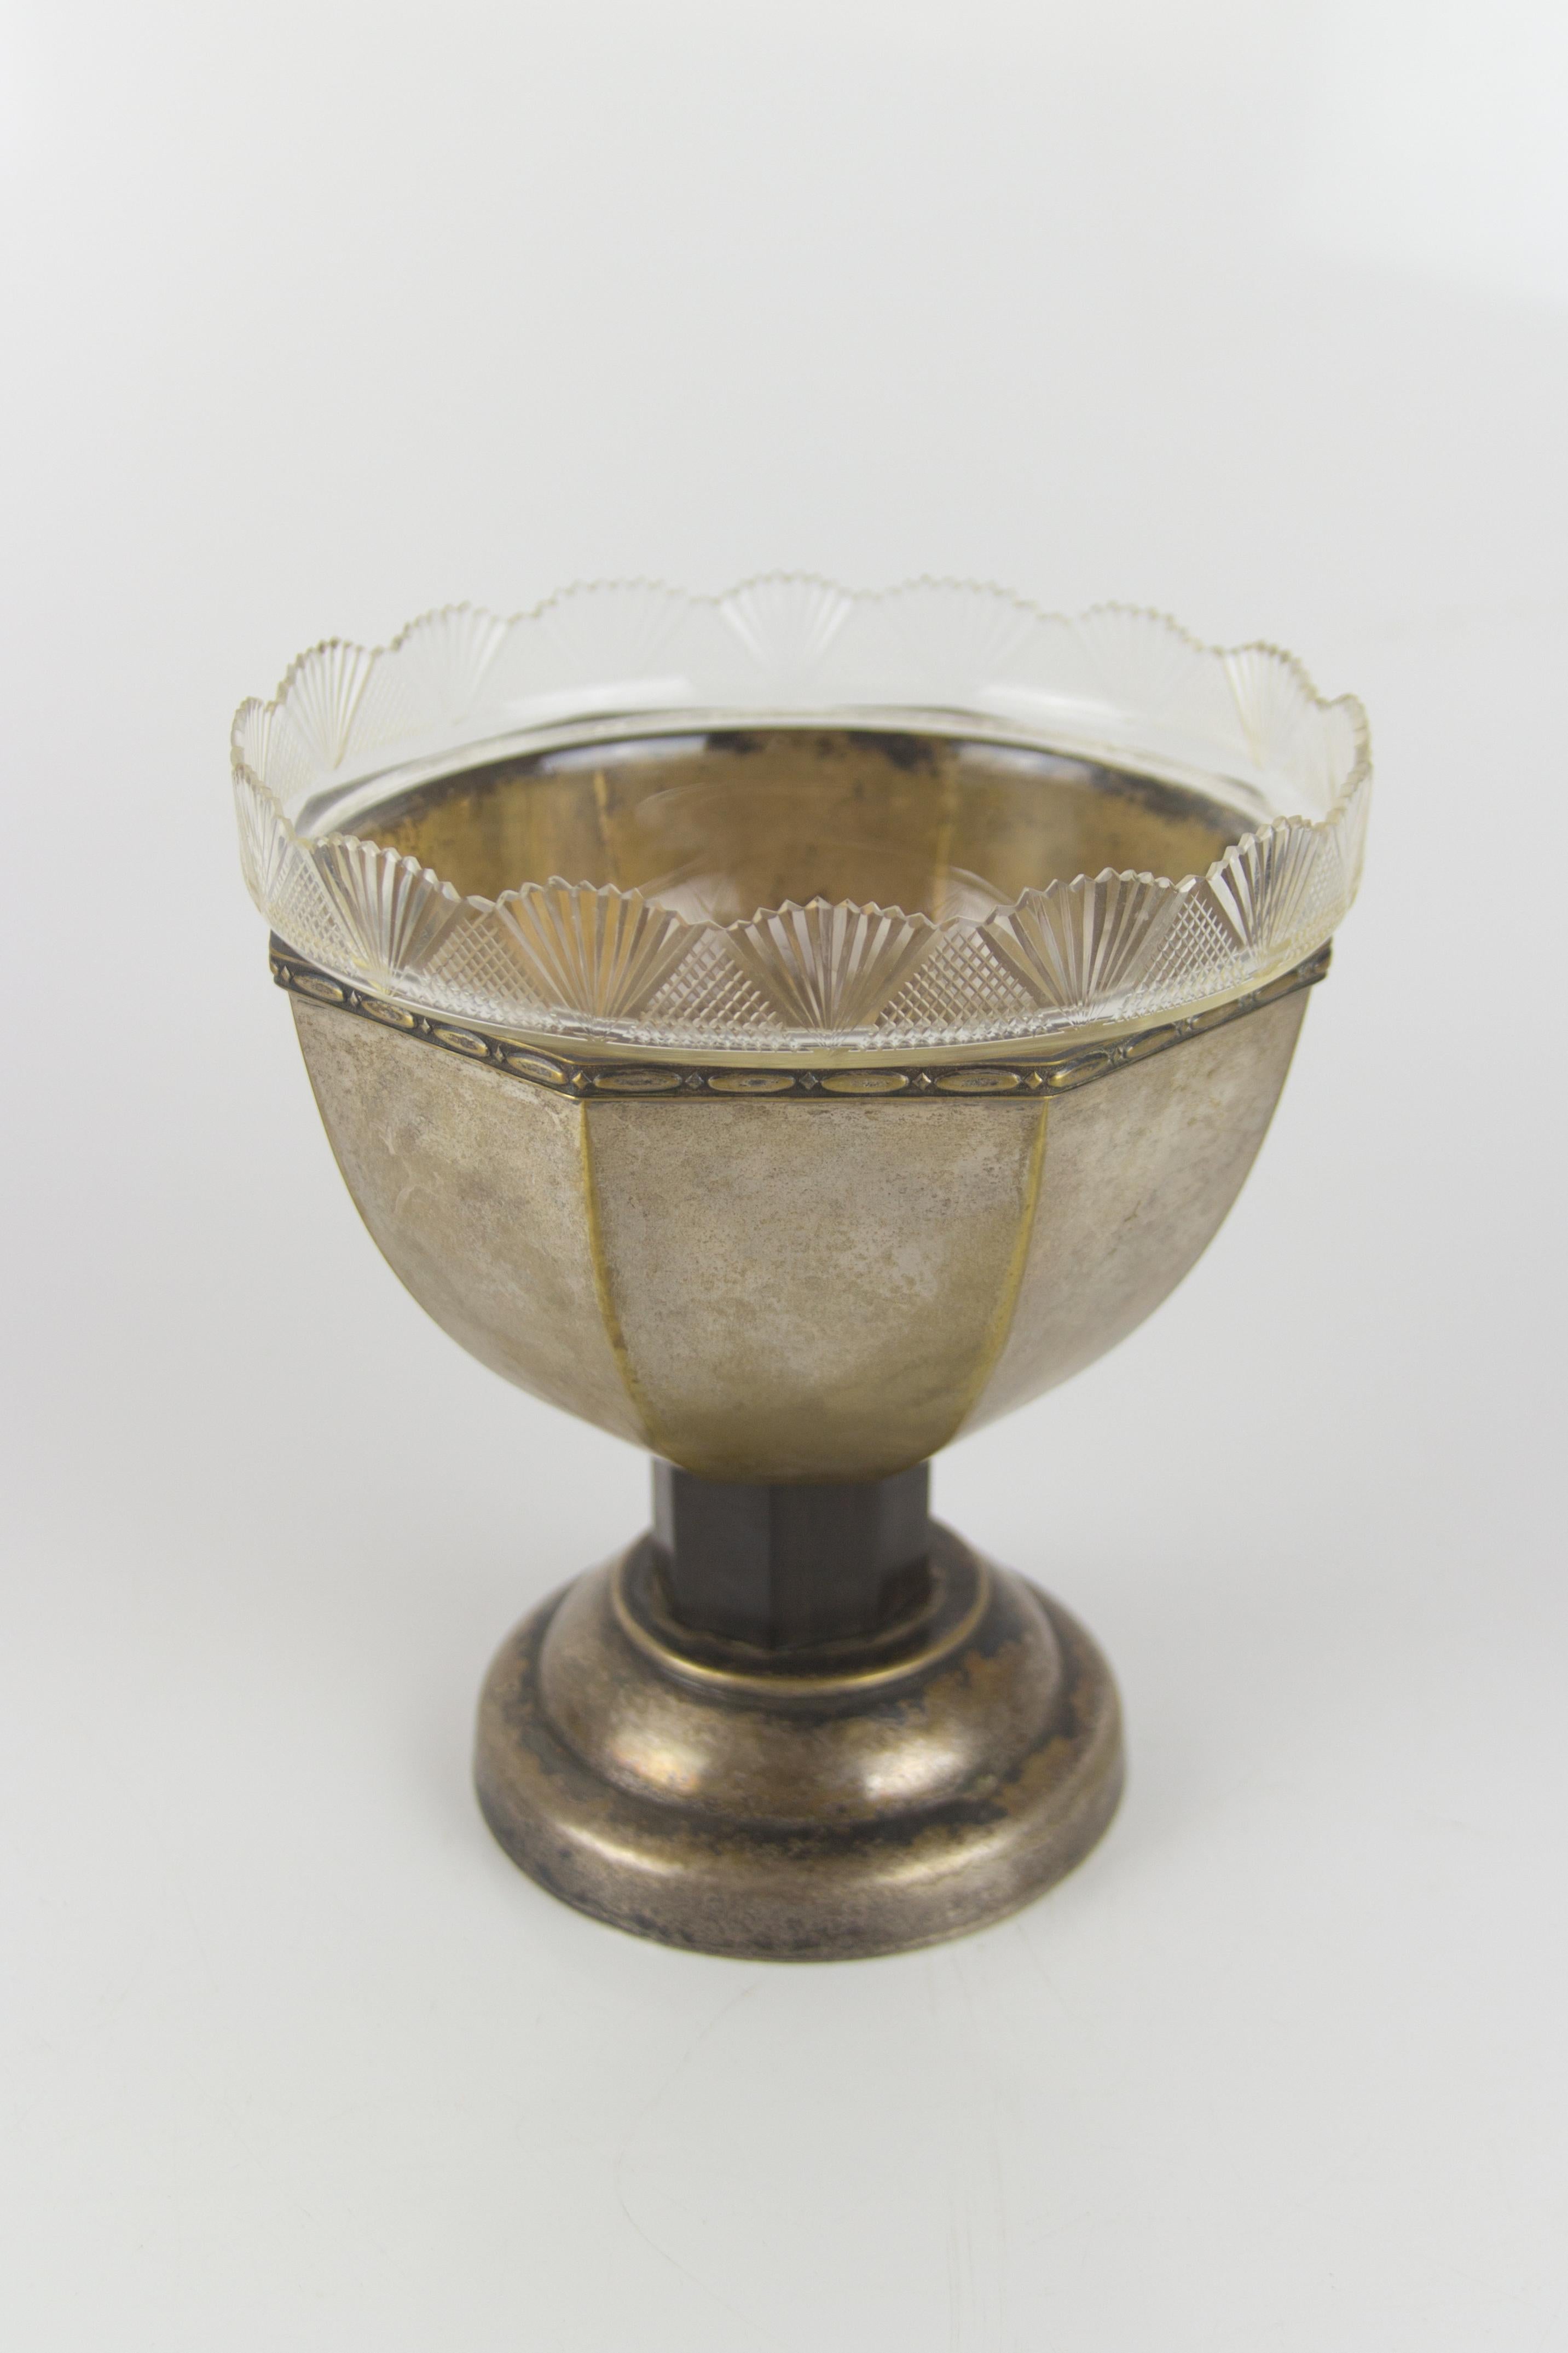 French Art Nouveau Brass Centerpiece with Cut-Glass Bowl, 1920s 14